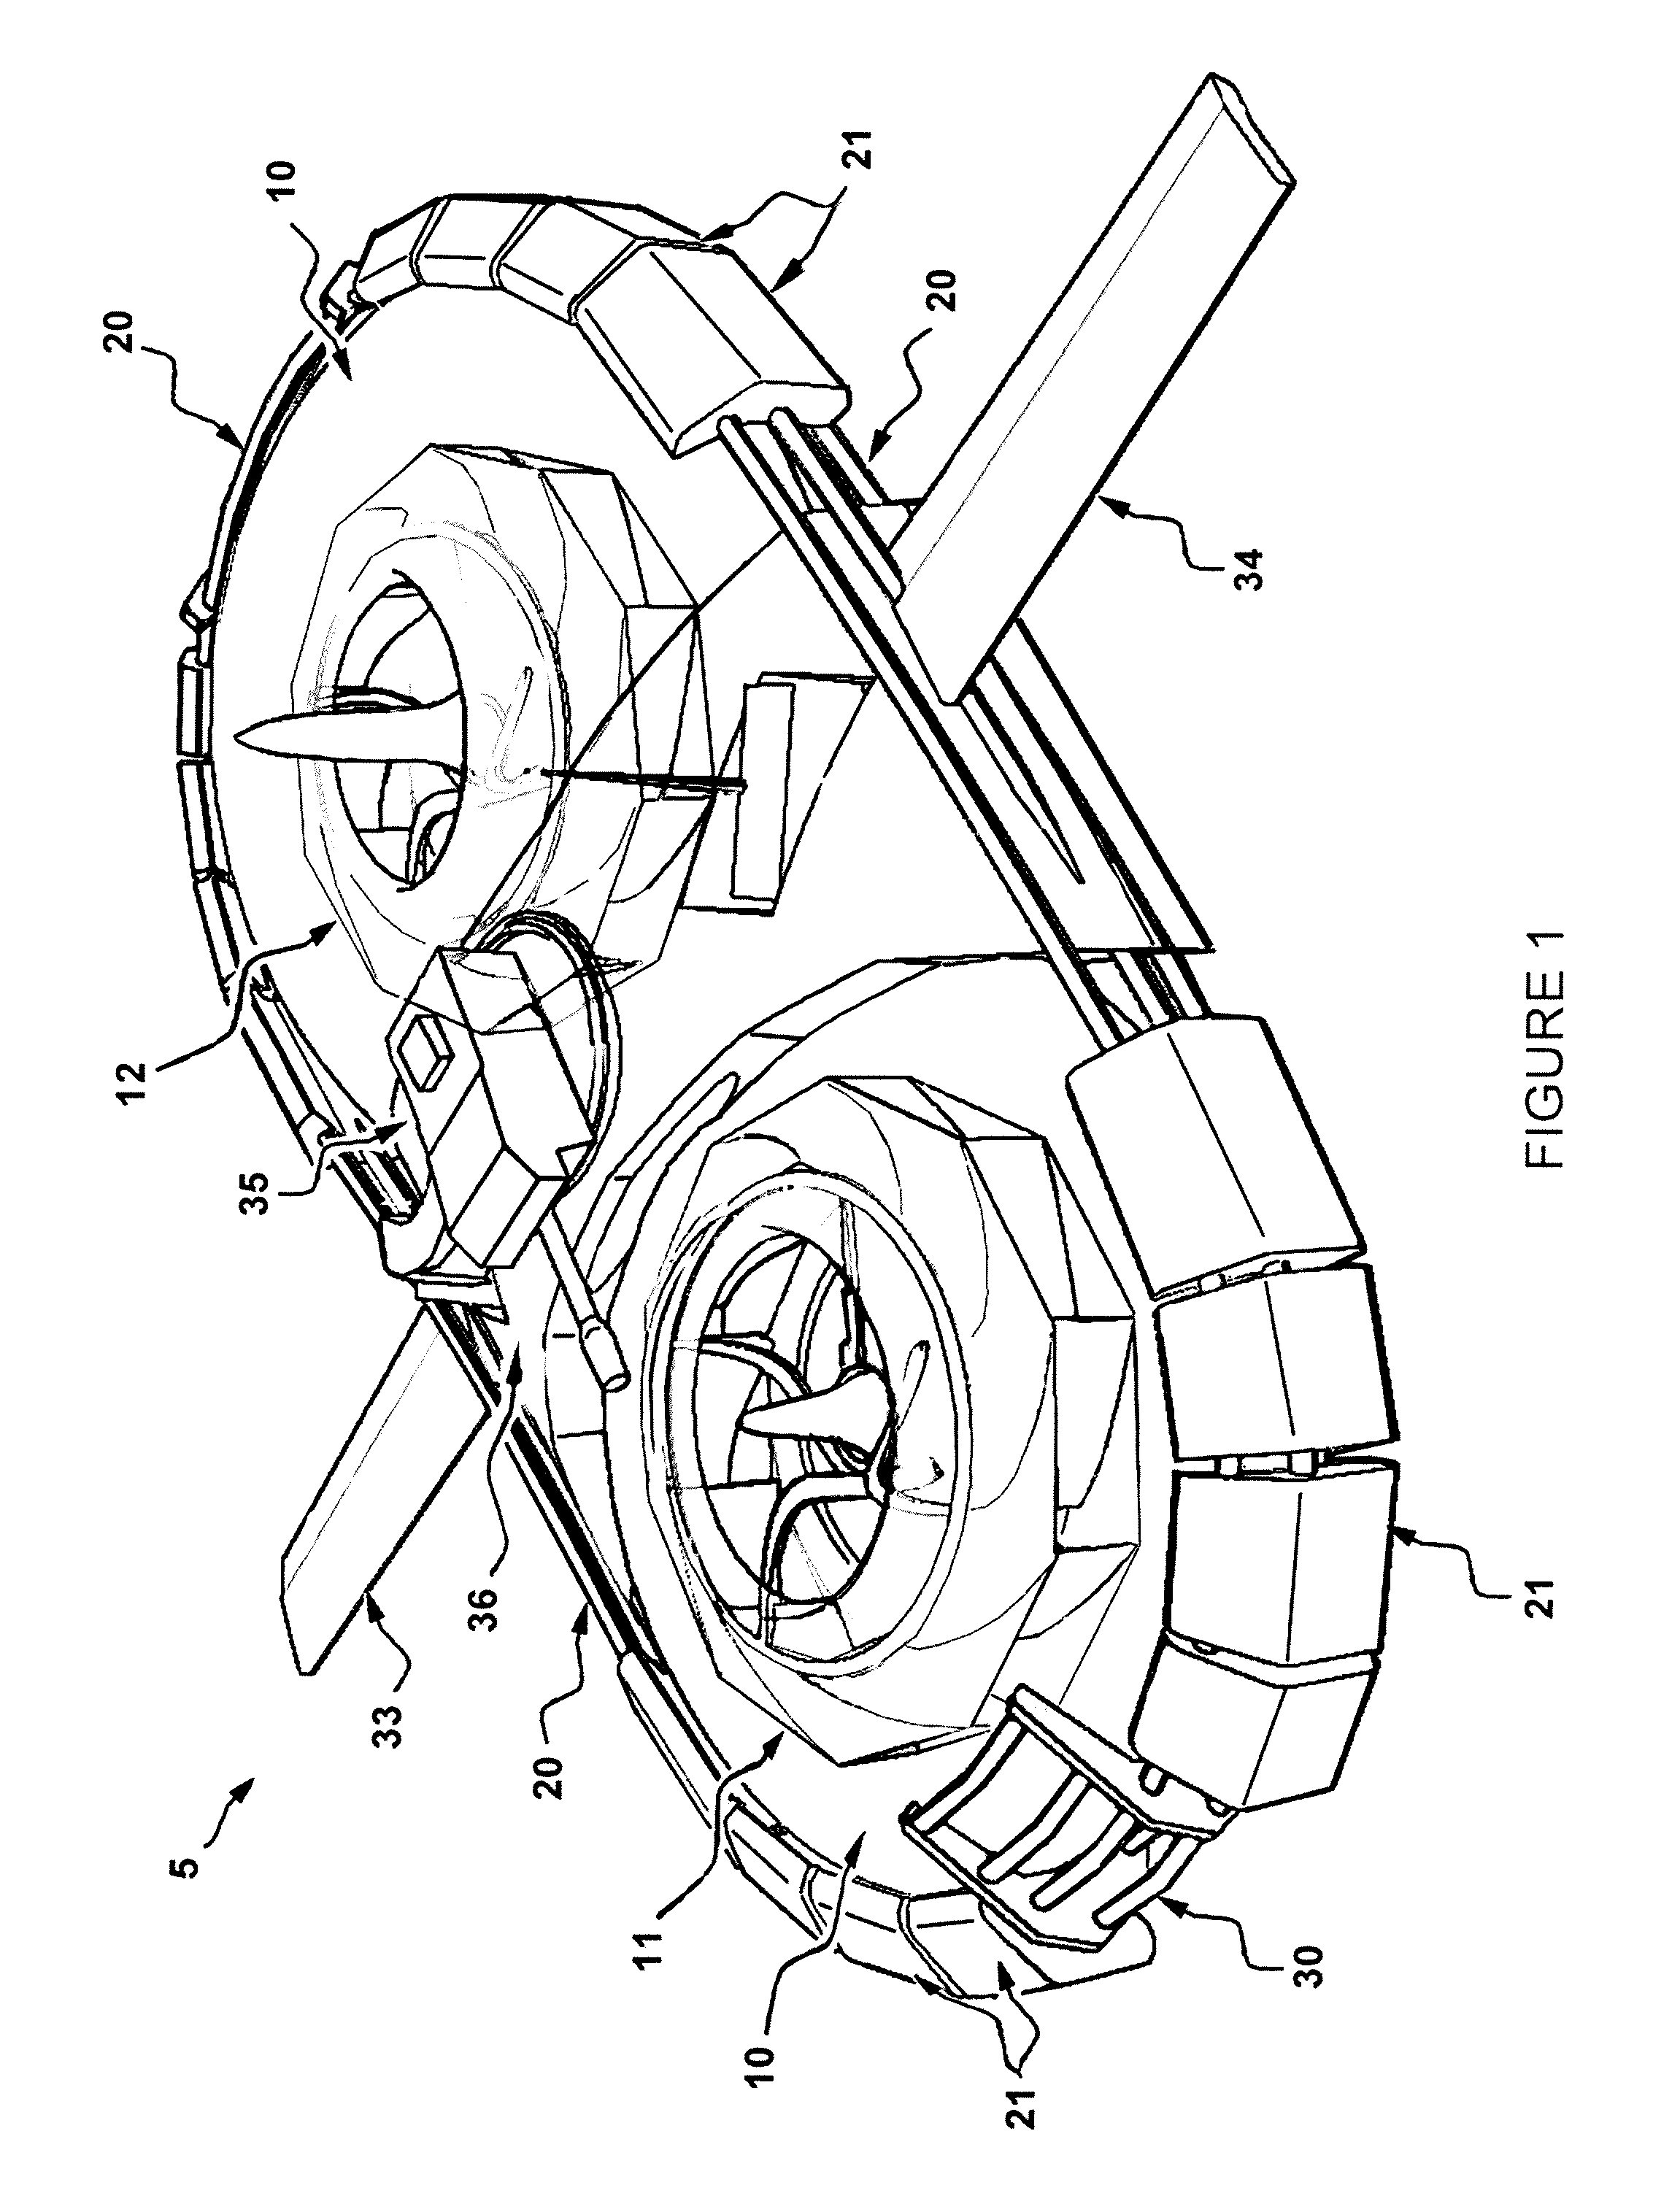 Aircraft vehicle centrifugal fan apparatus